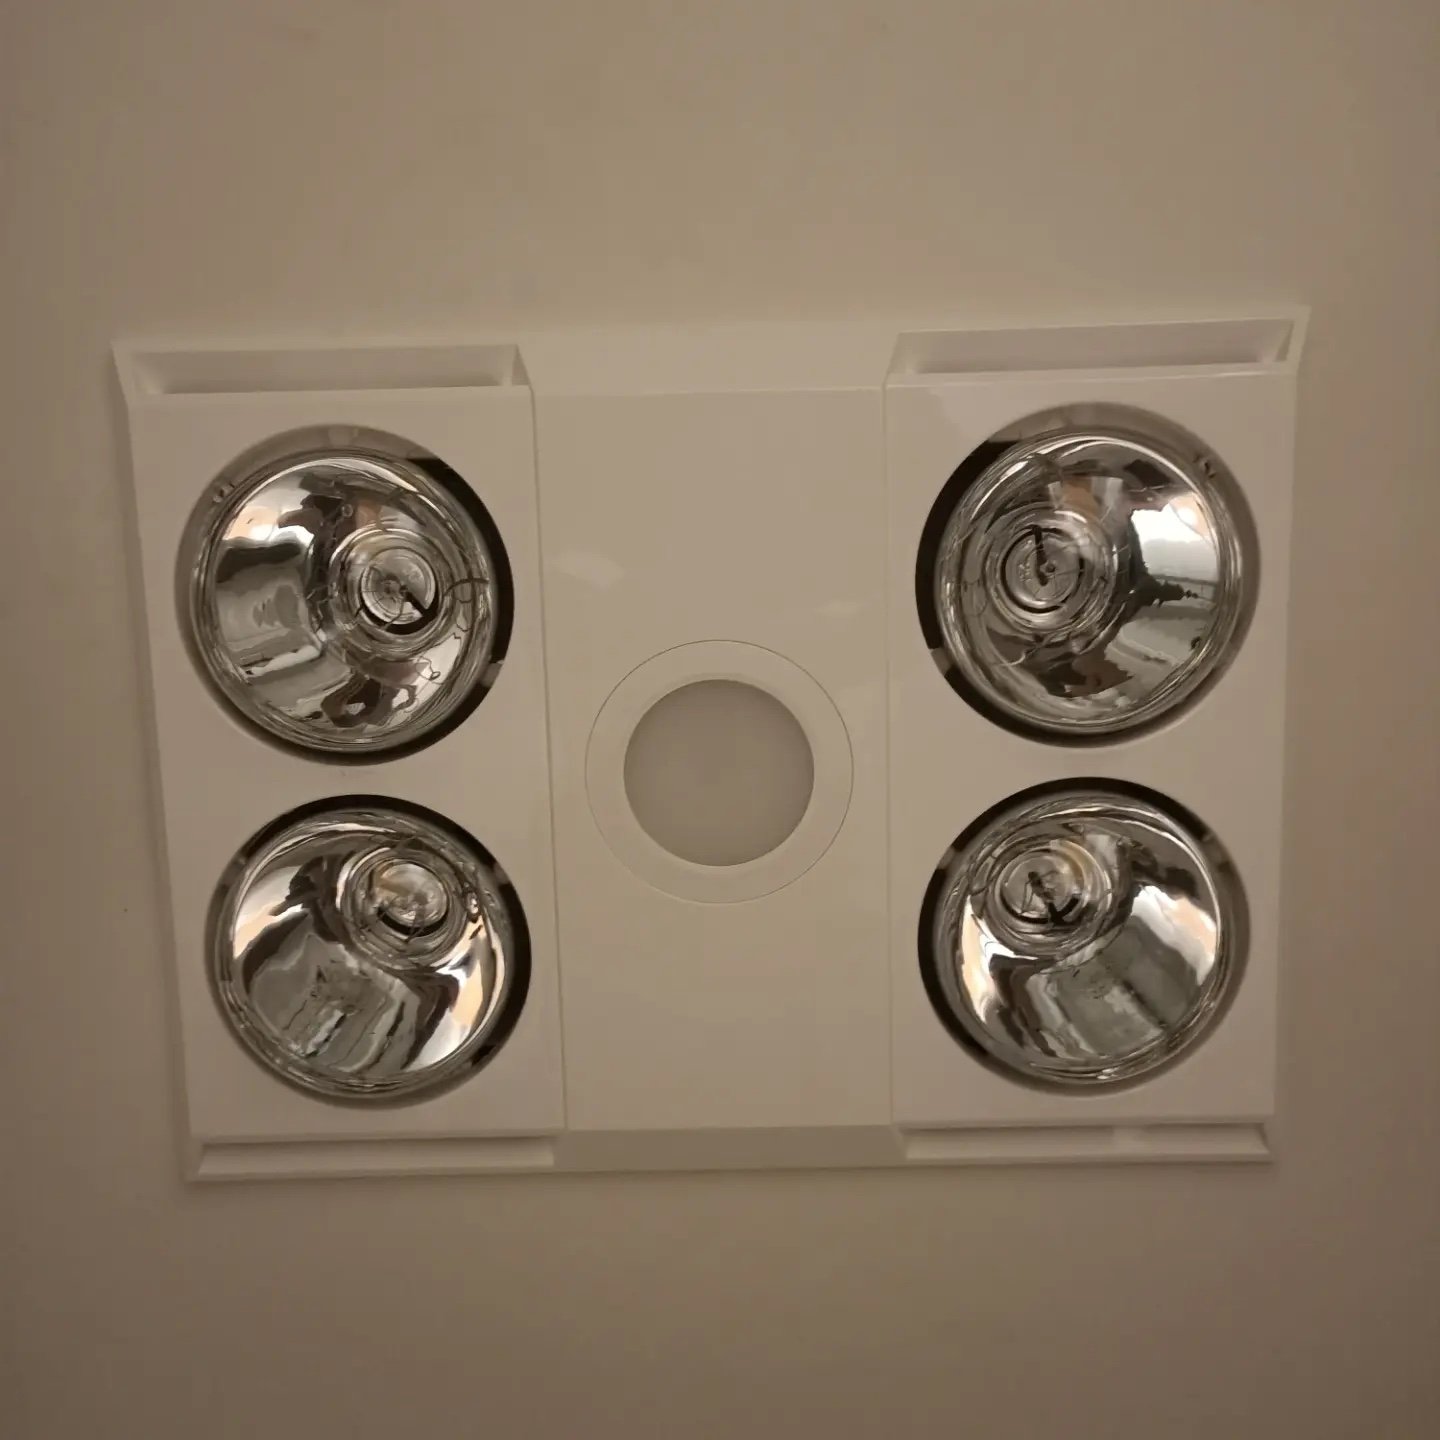 Bathroom Heat Lamps